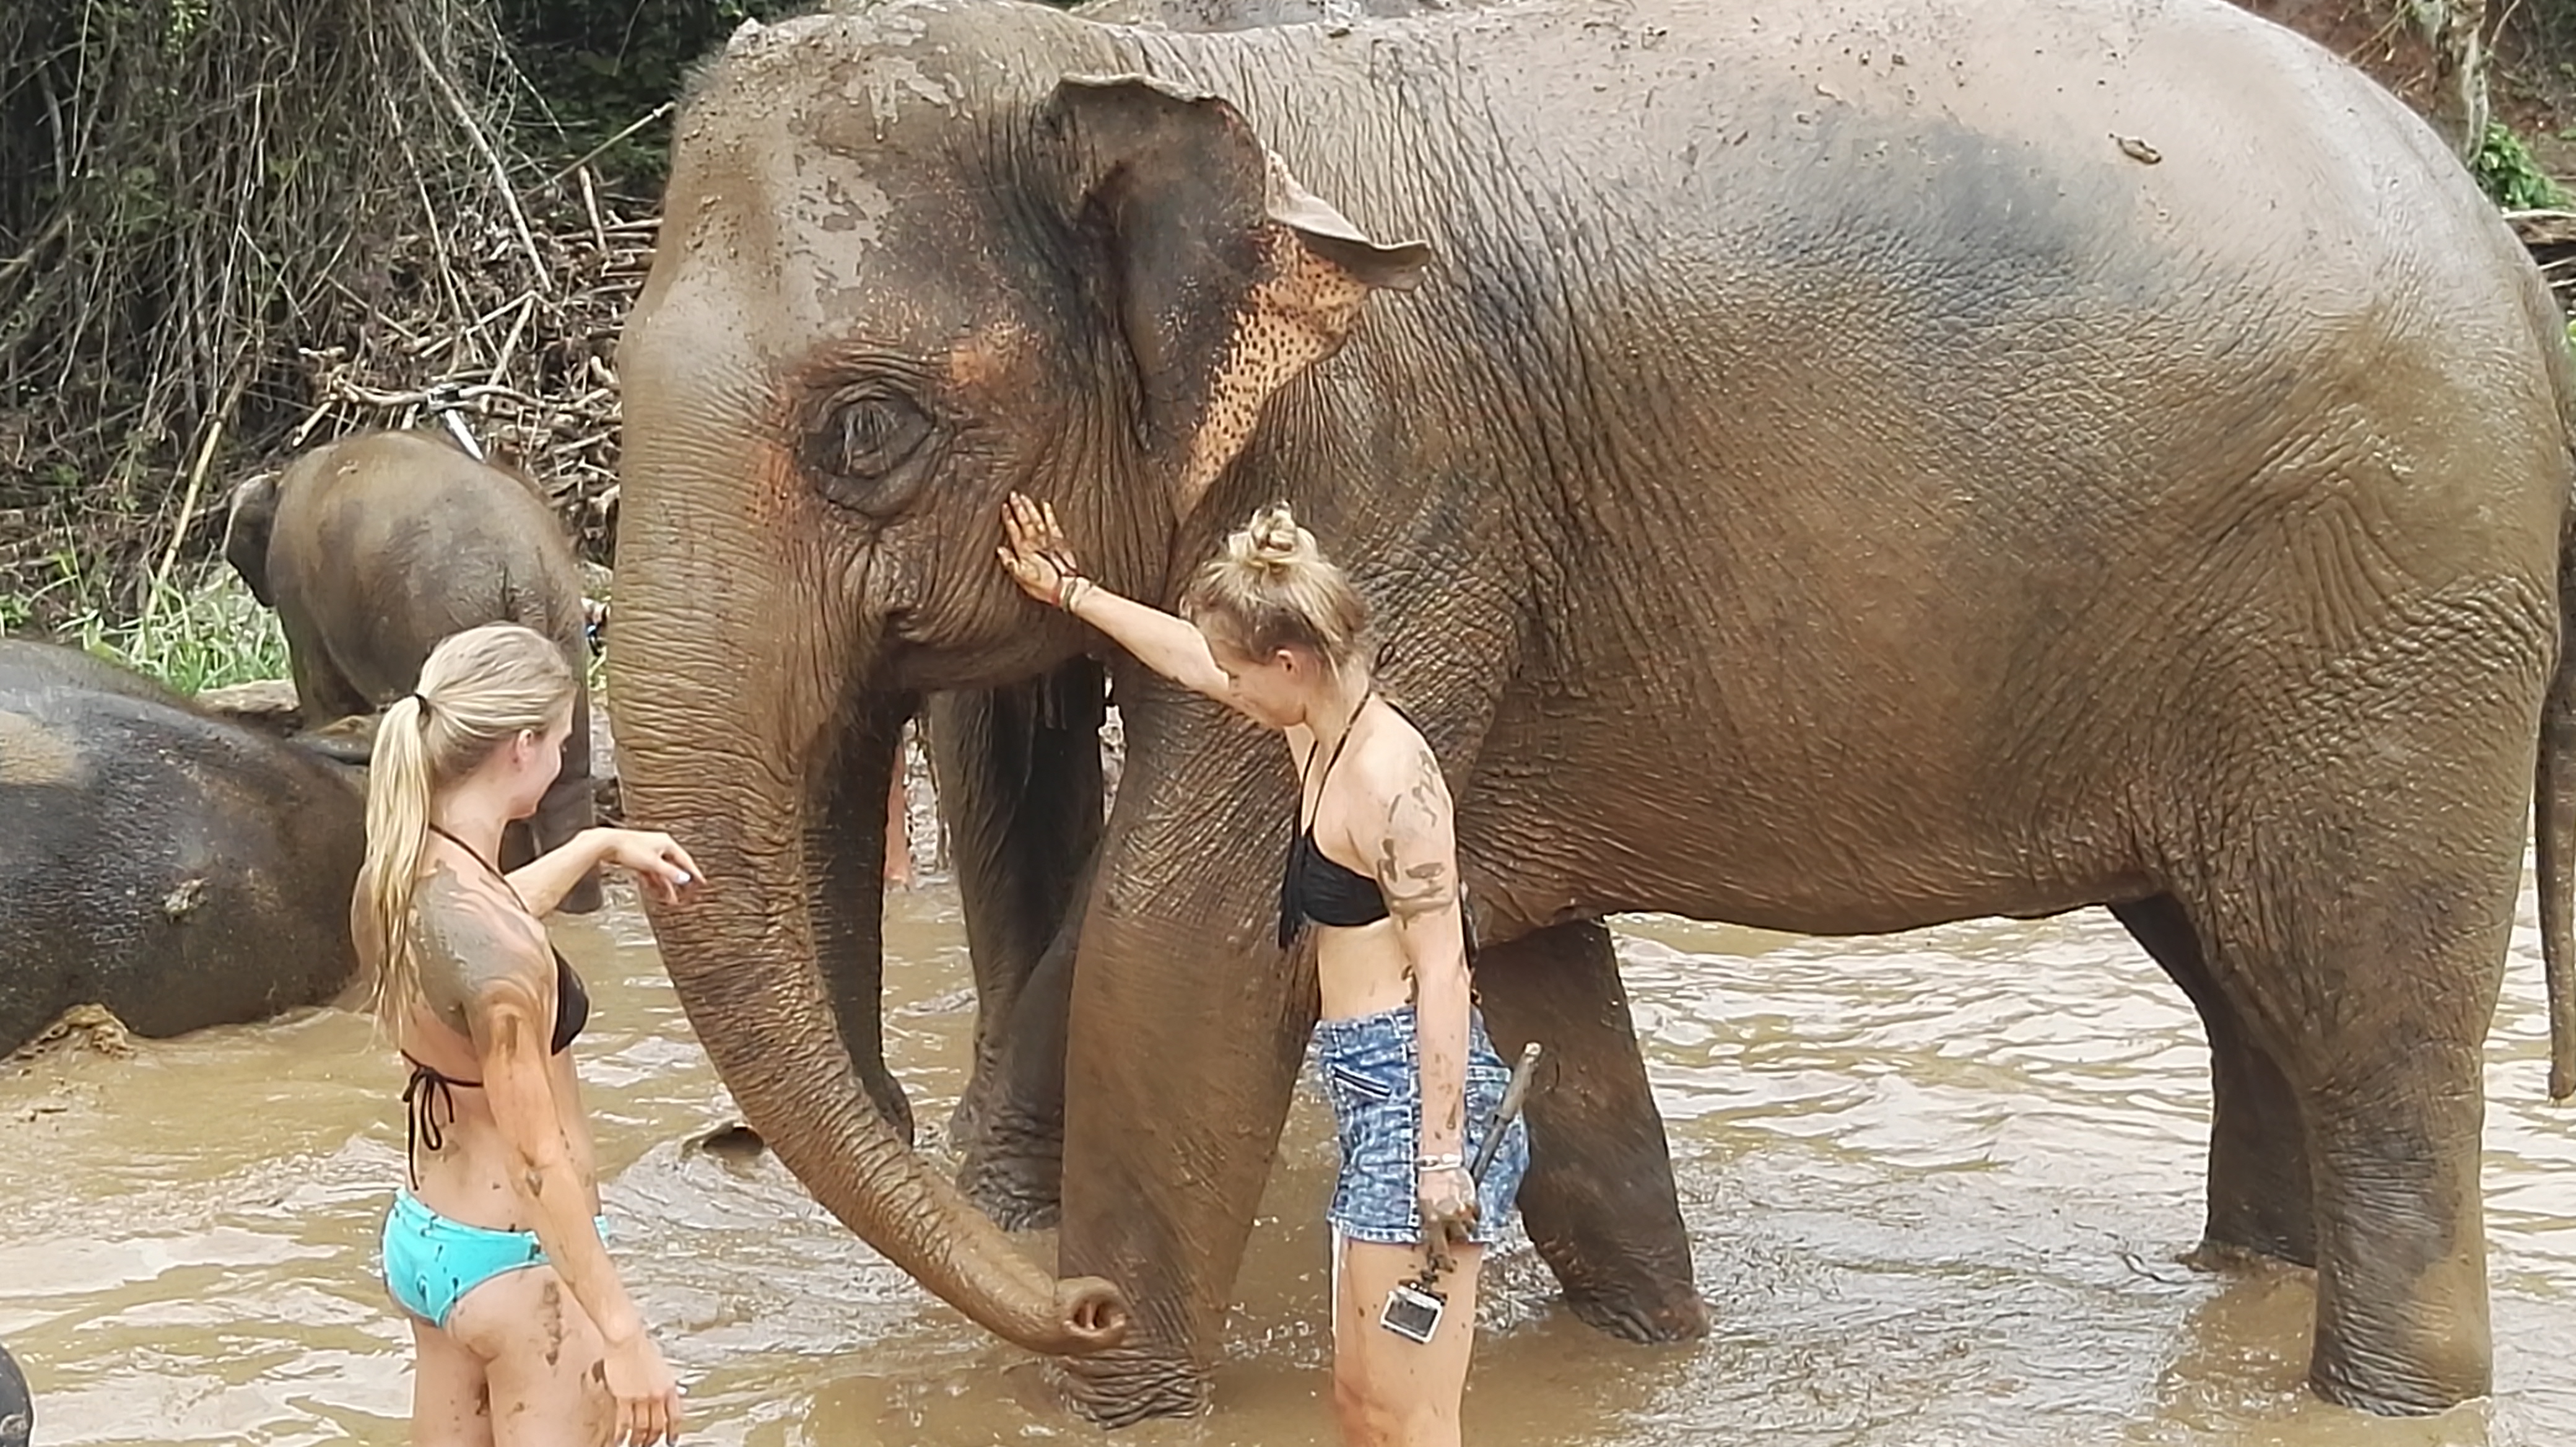 Giving our friends a bath at The Elephant Jungle Sanctuary! 